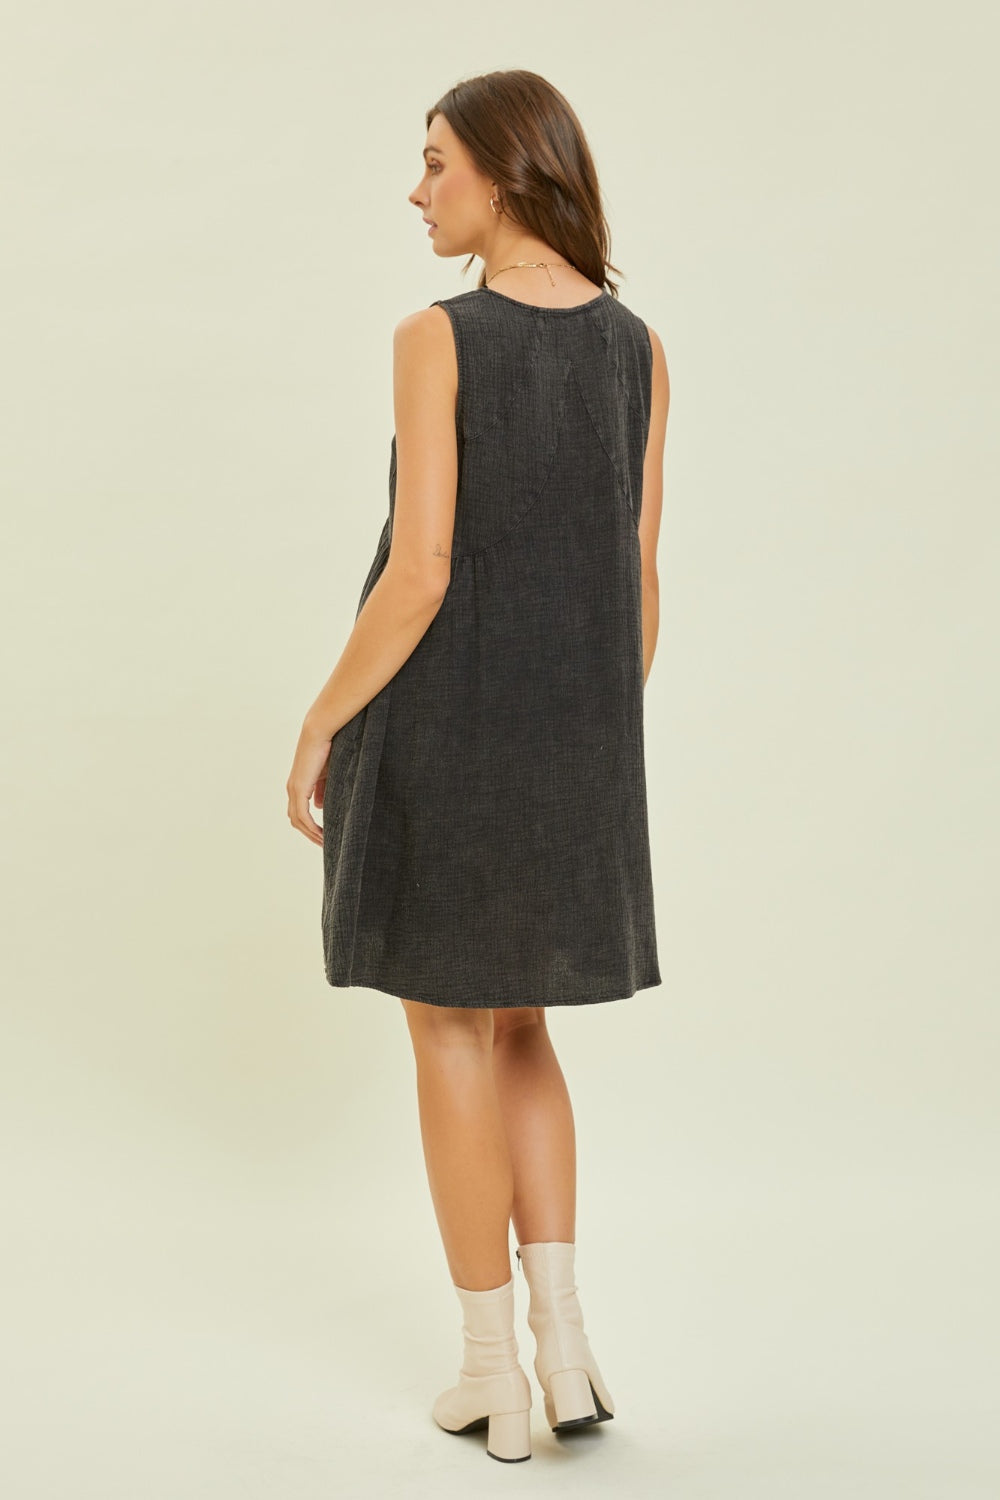 TEEK - Black Texture V-Neck Sleeveless Flare Dress DRESS TEEK Trend   